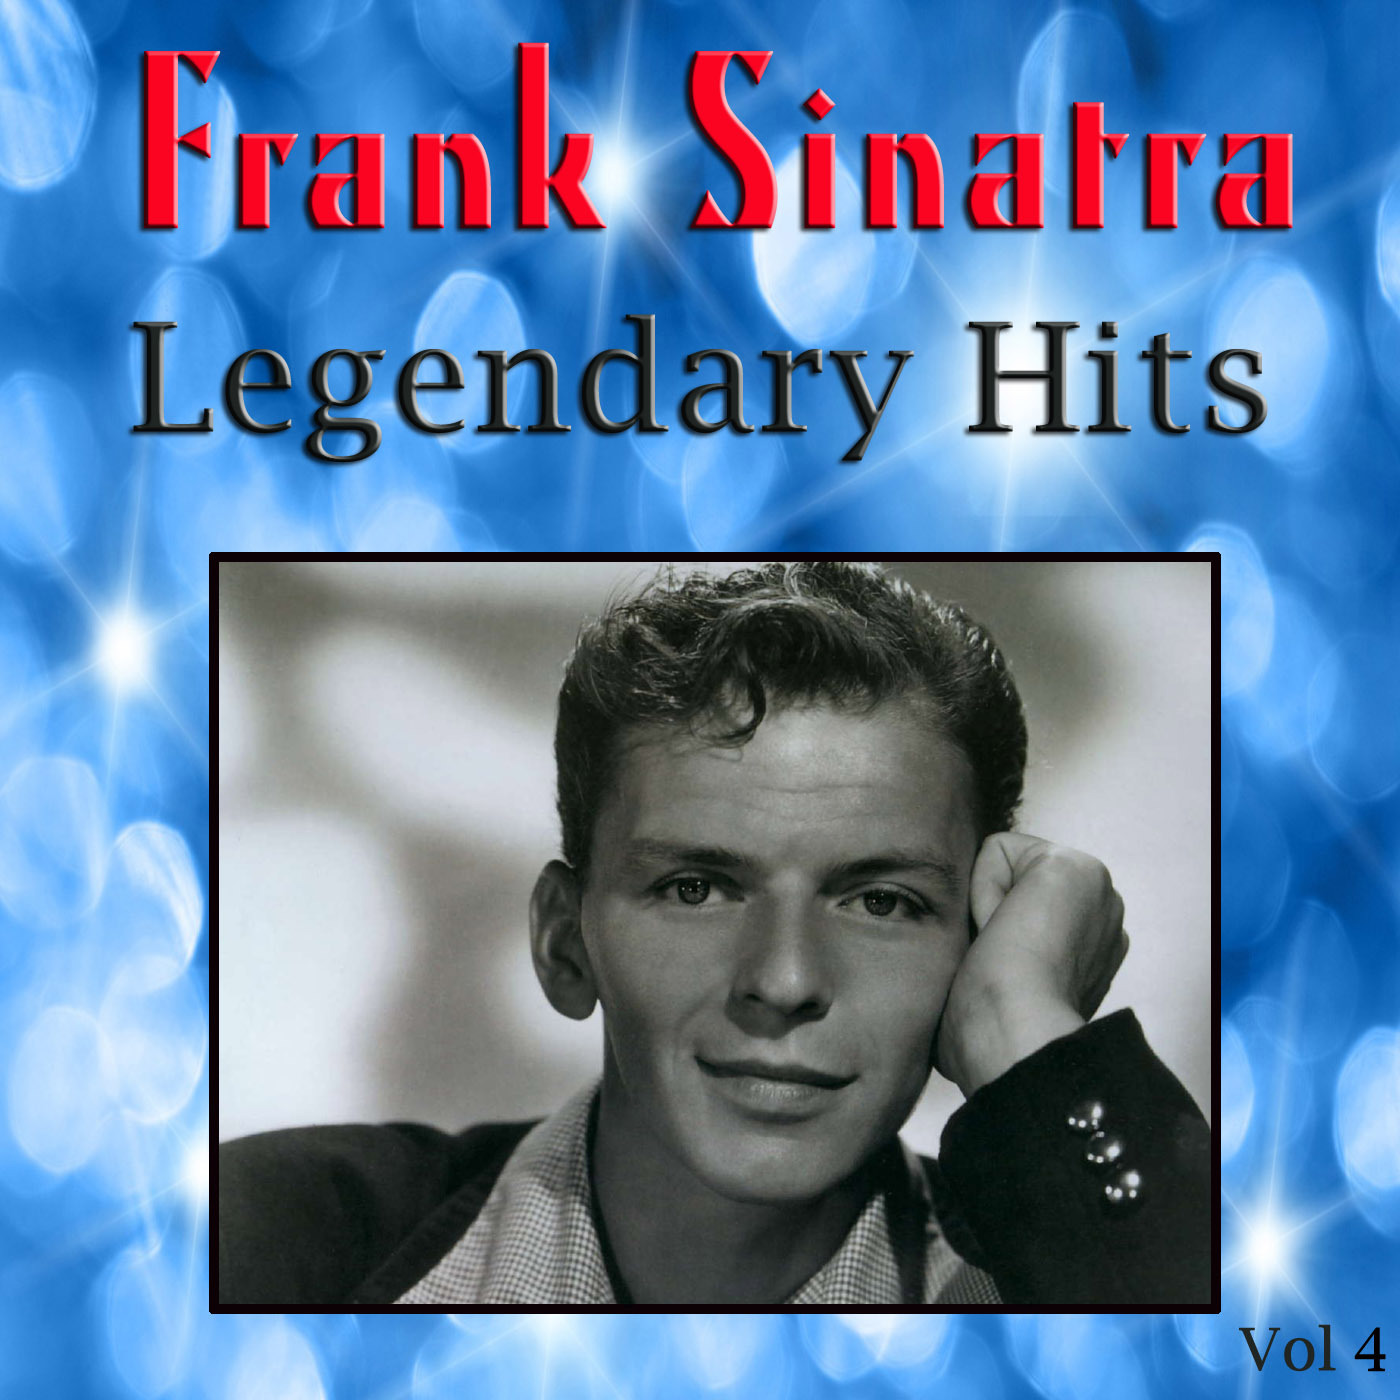 Frank Sinatra Legendary Hits Vol 4